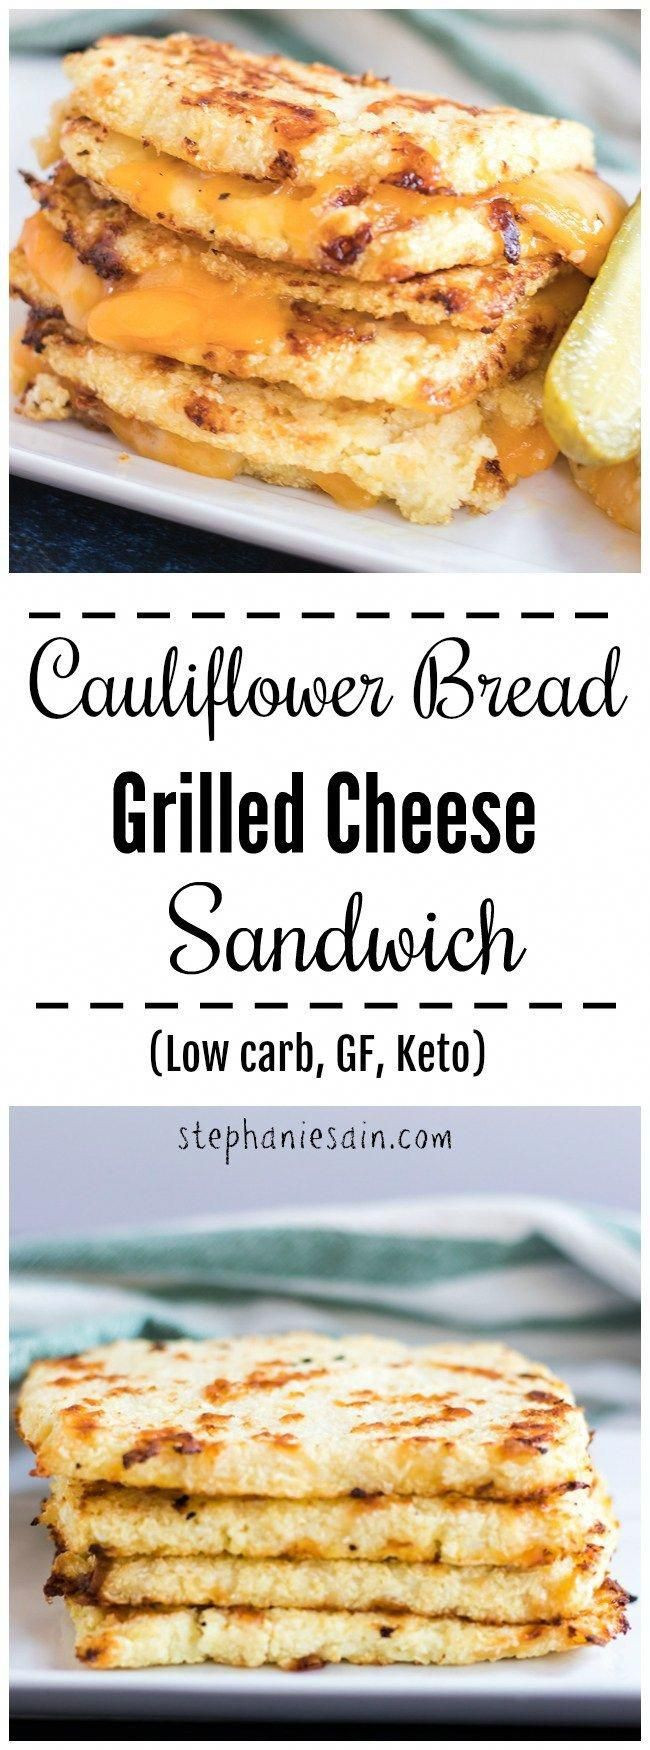 Cauliflower Sandwich Bread Recipe
 This Cauliflower Bread Grilled Cheese Sandwich is a